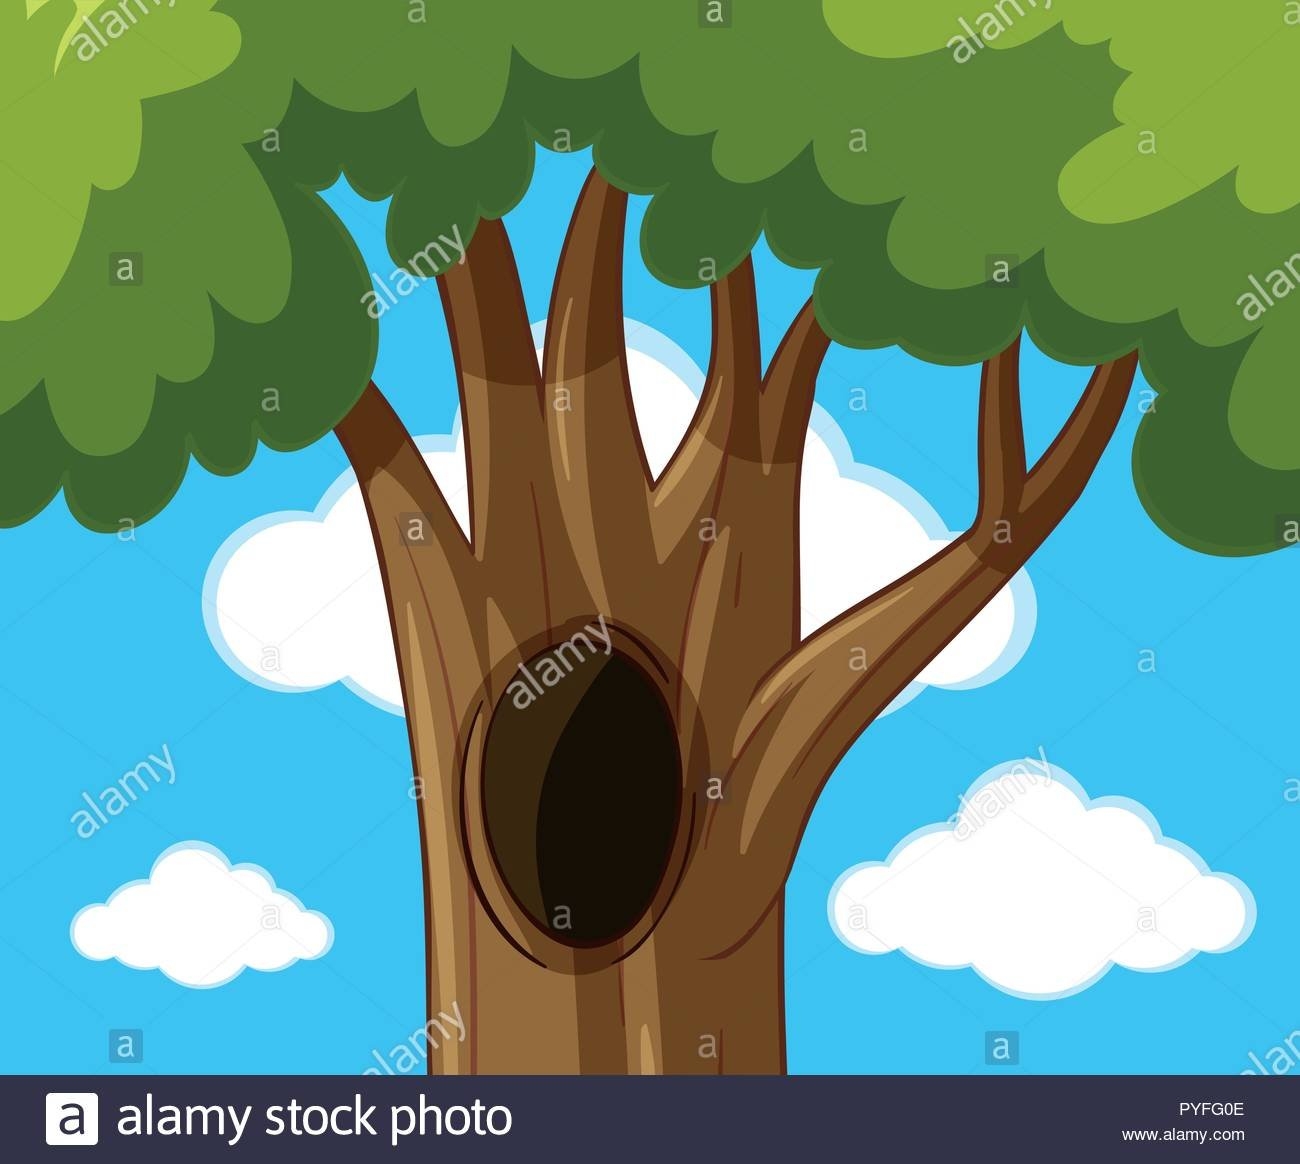 Интерпретация рисунка «Мое дерево»